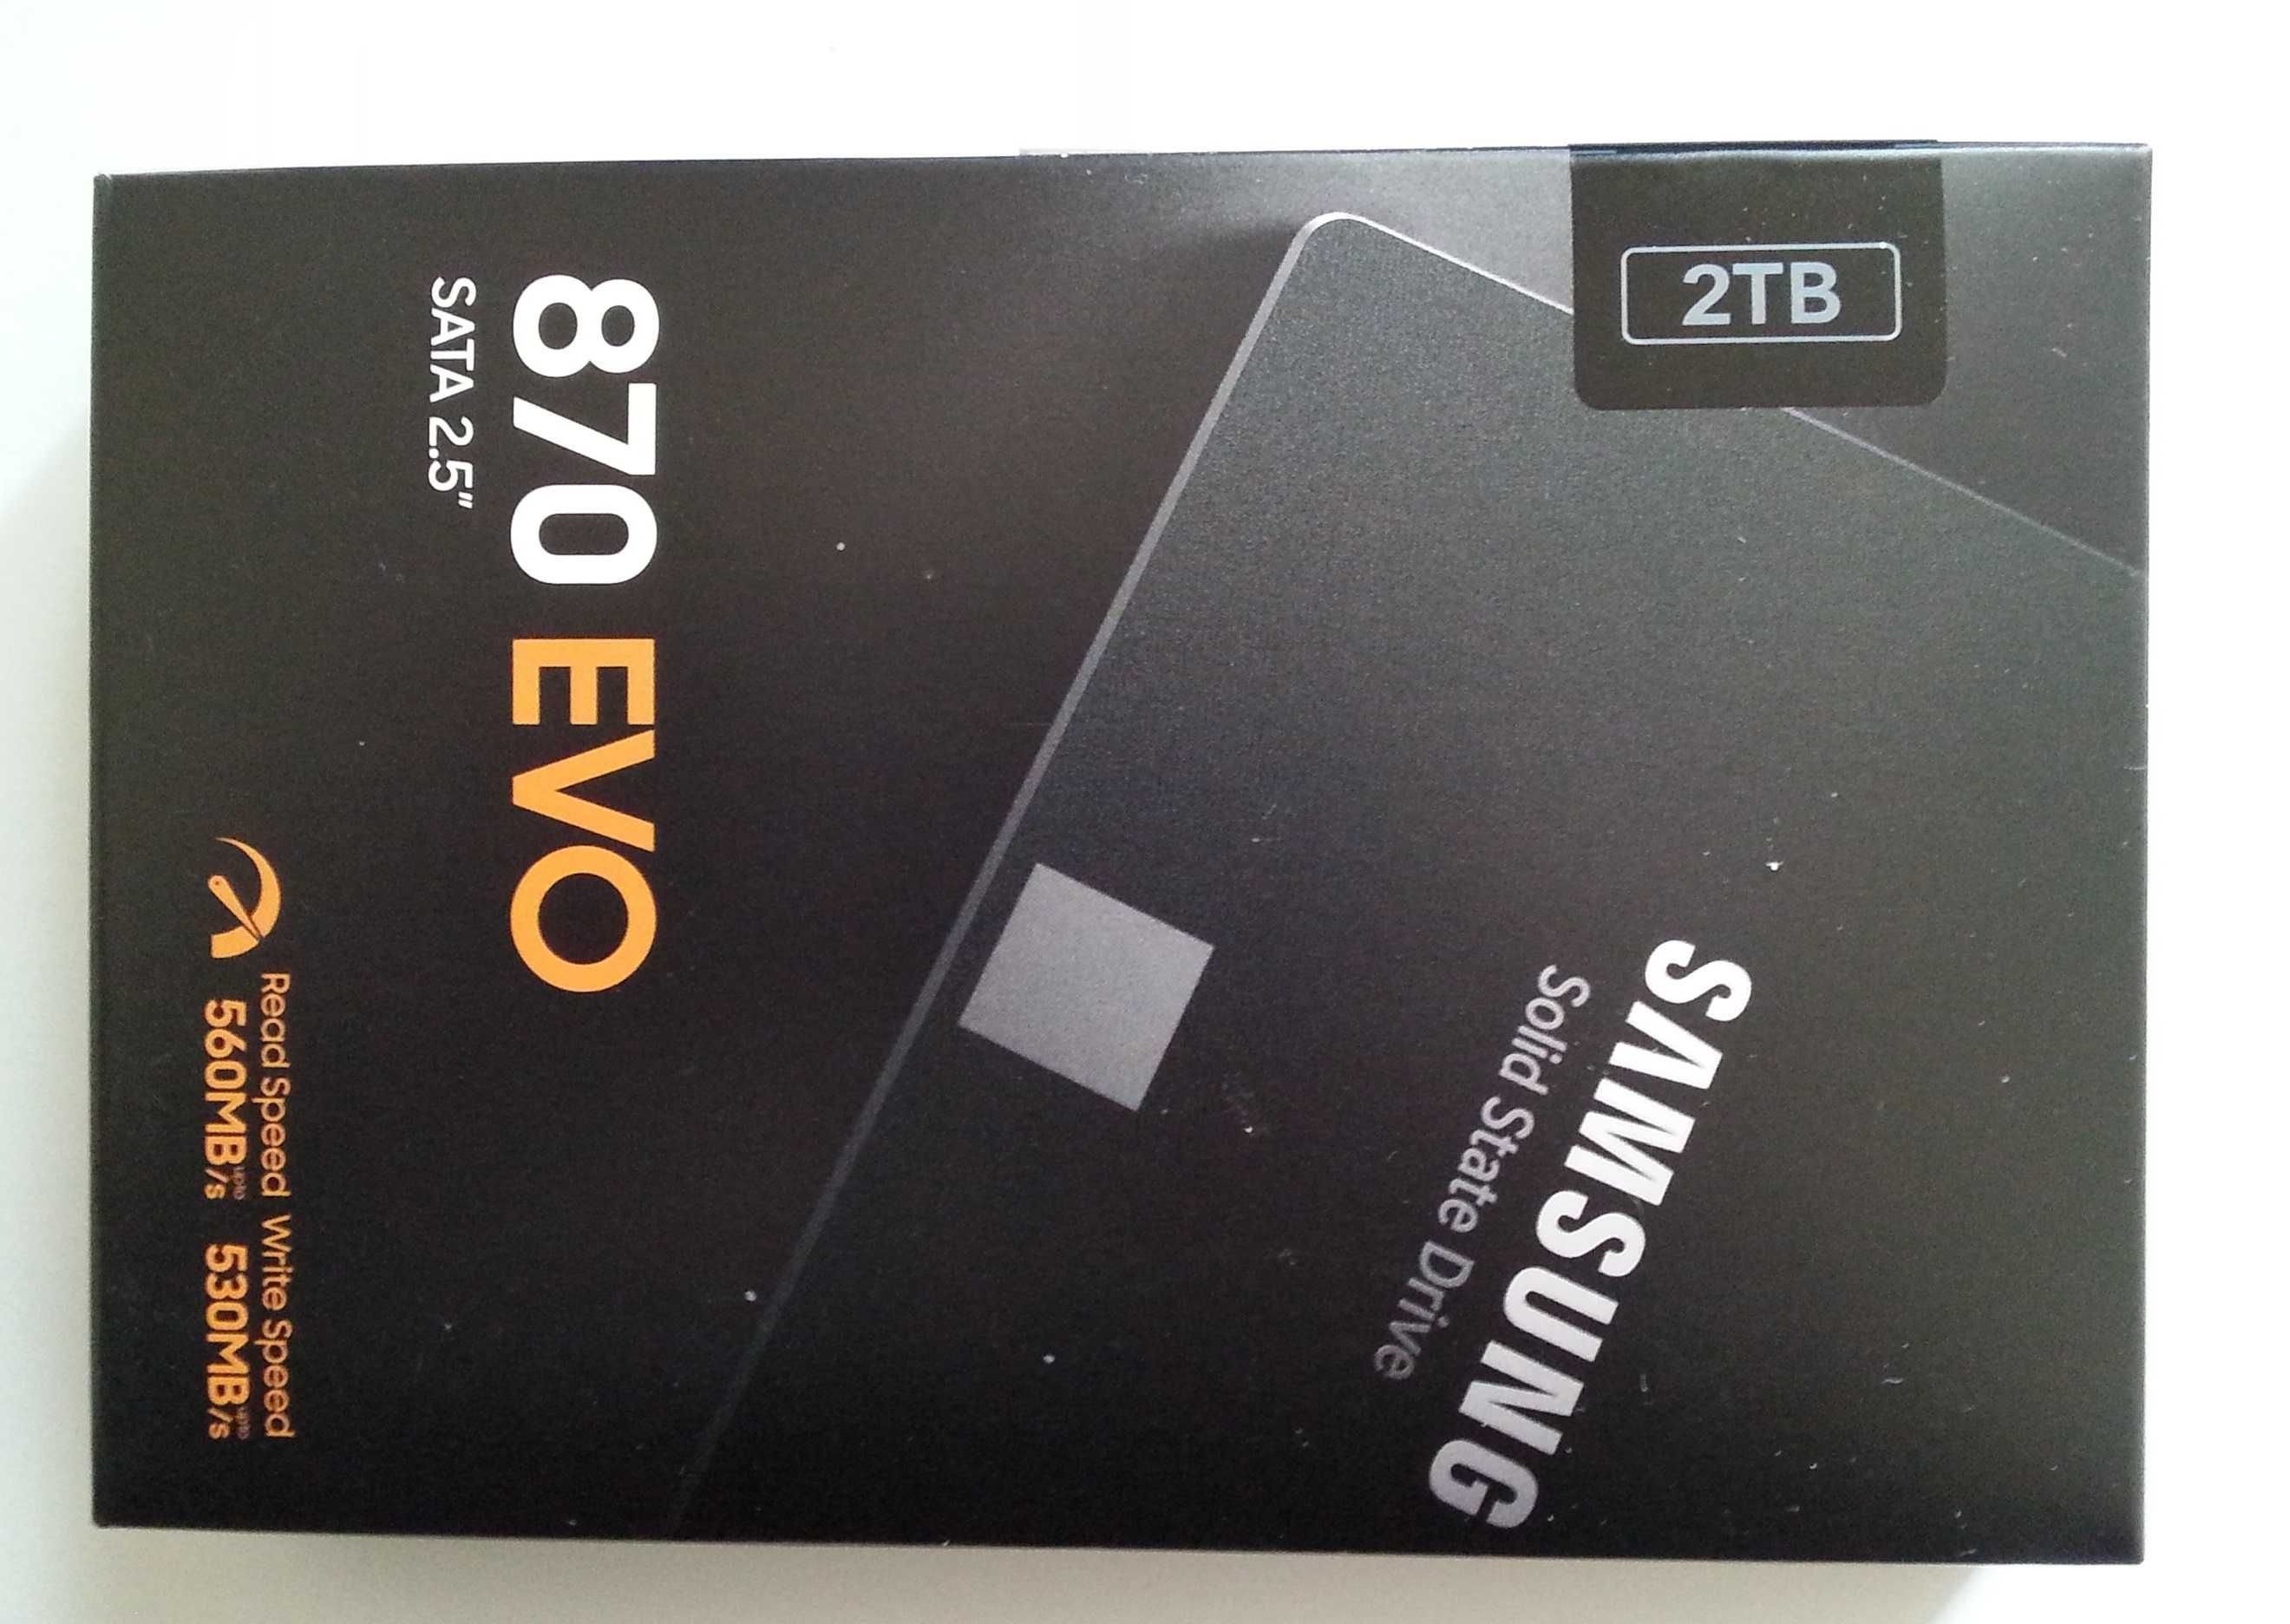 Stan nowy-Samsung 860 EVO-1TB-dysk ssd.Inne foto